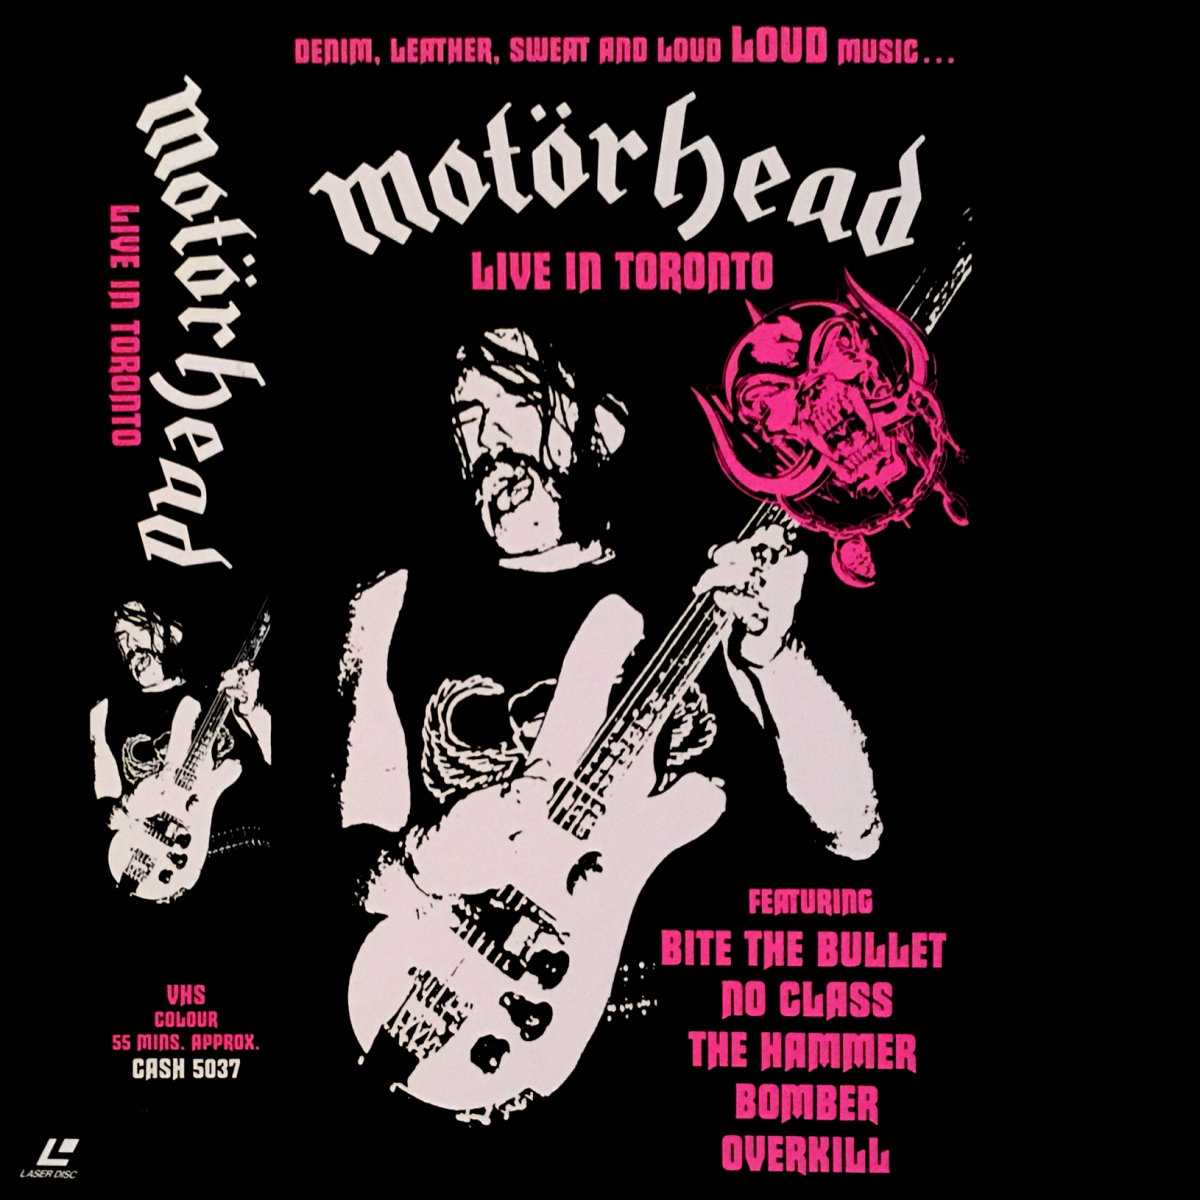 Cover - Motörhead - Live in Toronto.jpg